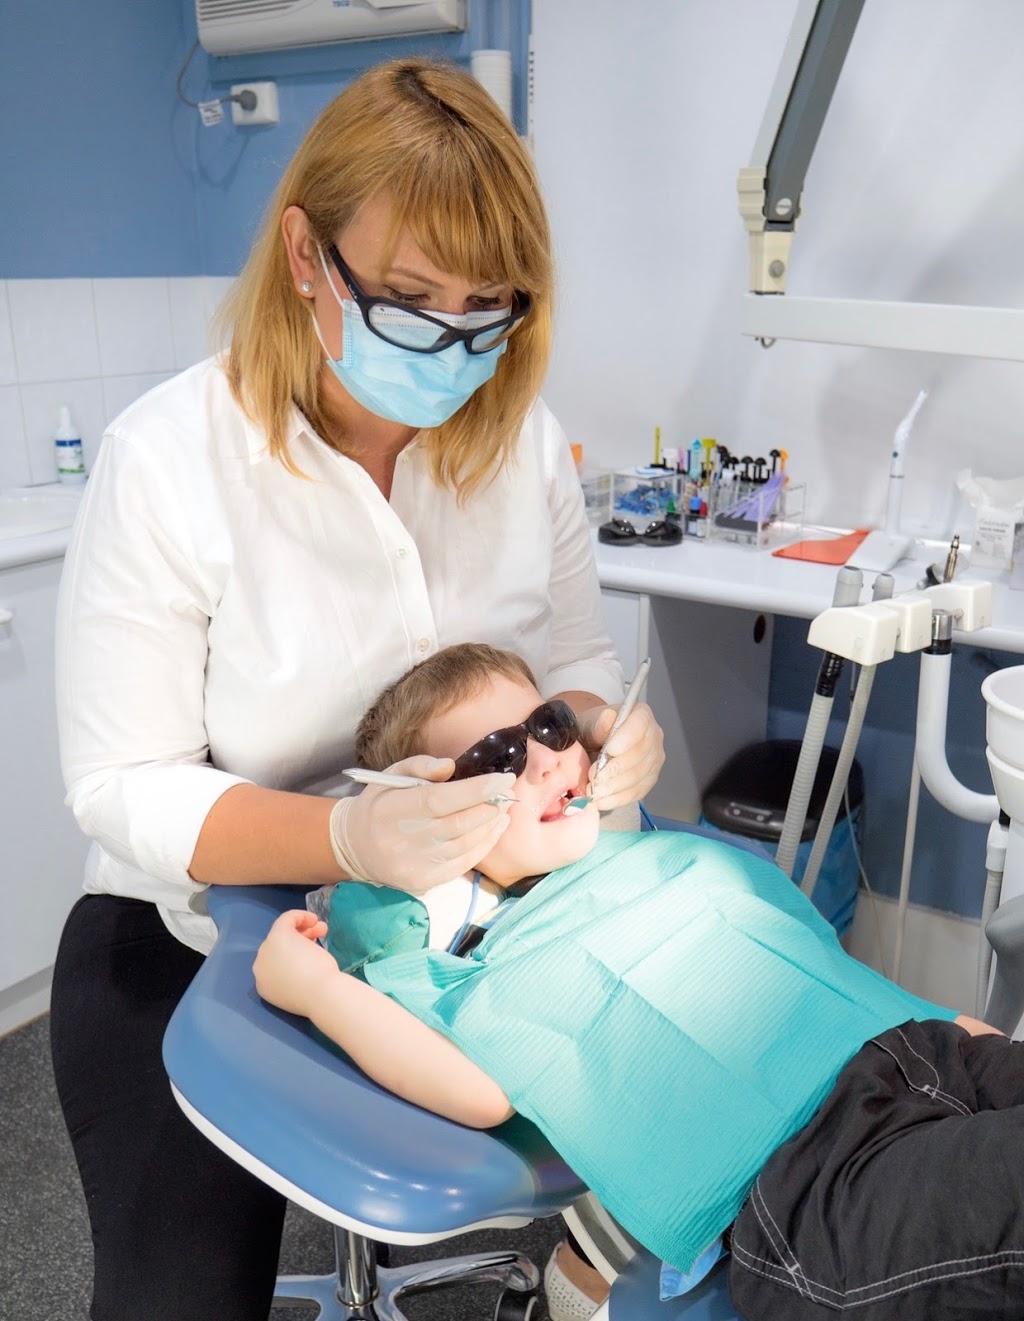 Dixon Dental Studio | dentist | 8 Sempill St, Maitland NSW 2320, Australia | 0249332862 OR +61 2 4933 2862